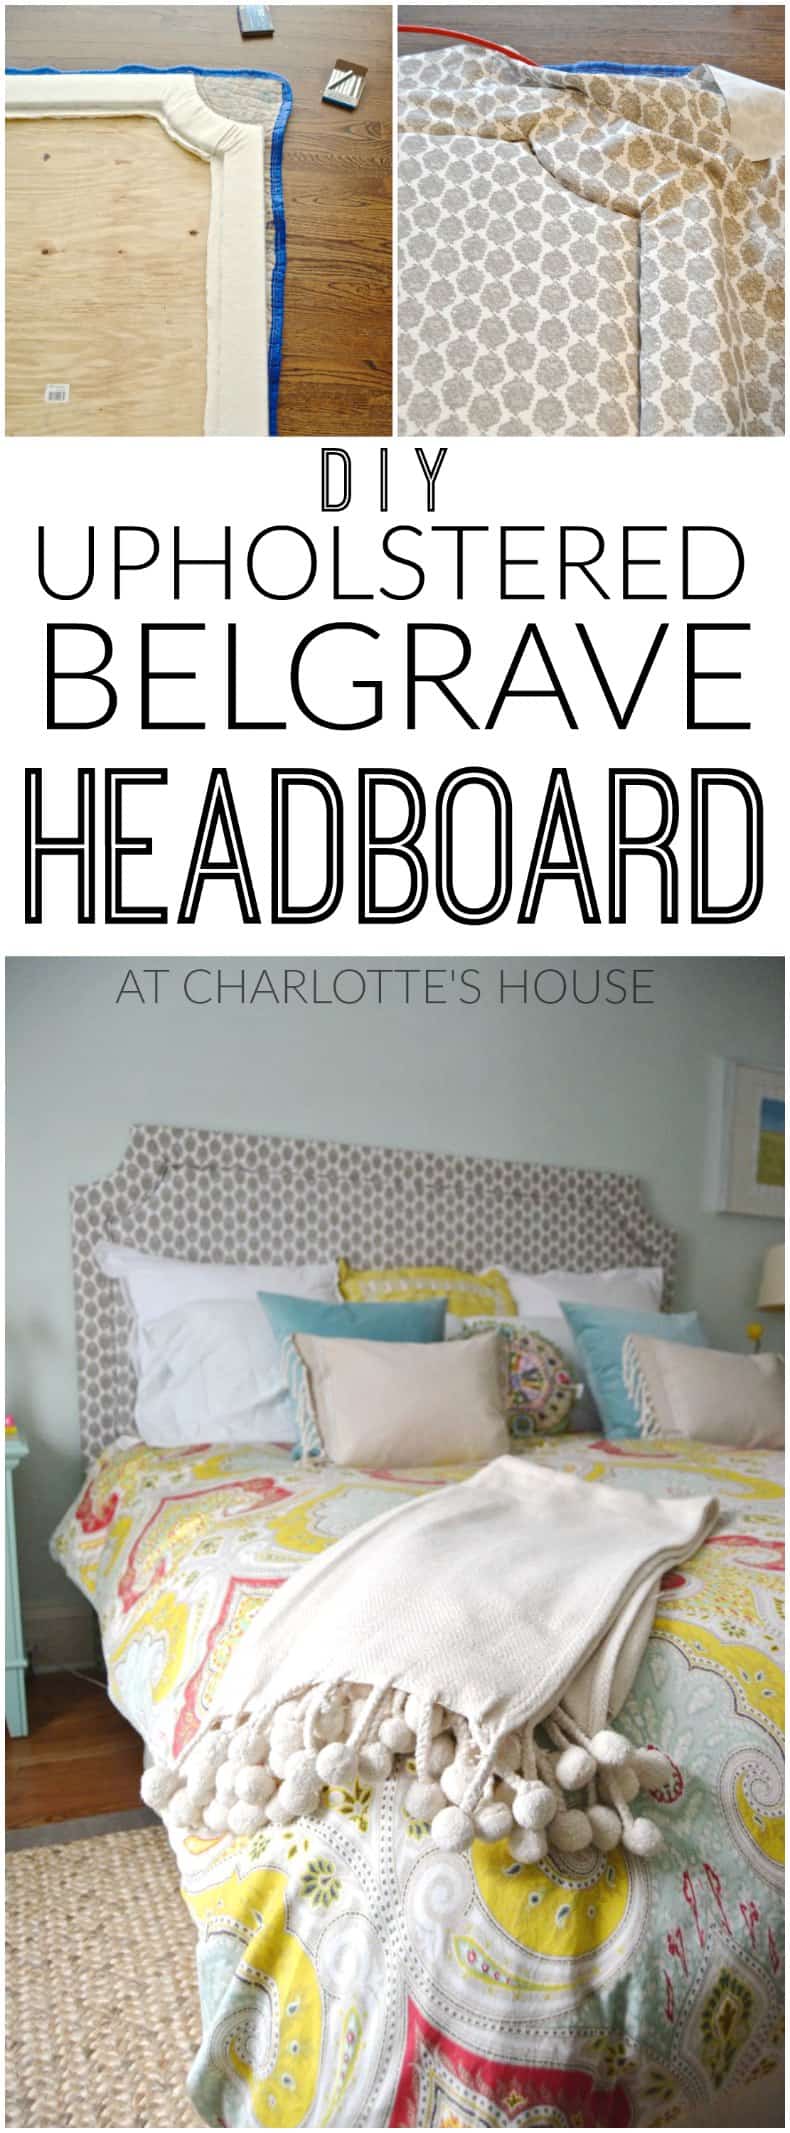 DIY upholstered belgrave headboard tutorial.